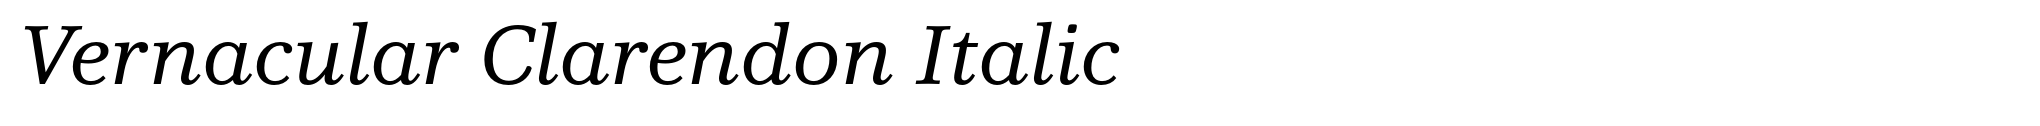 Vernacular Clarendon Italic image